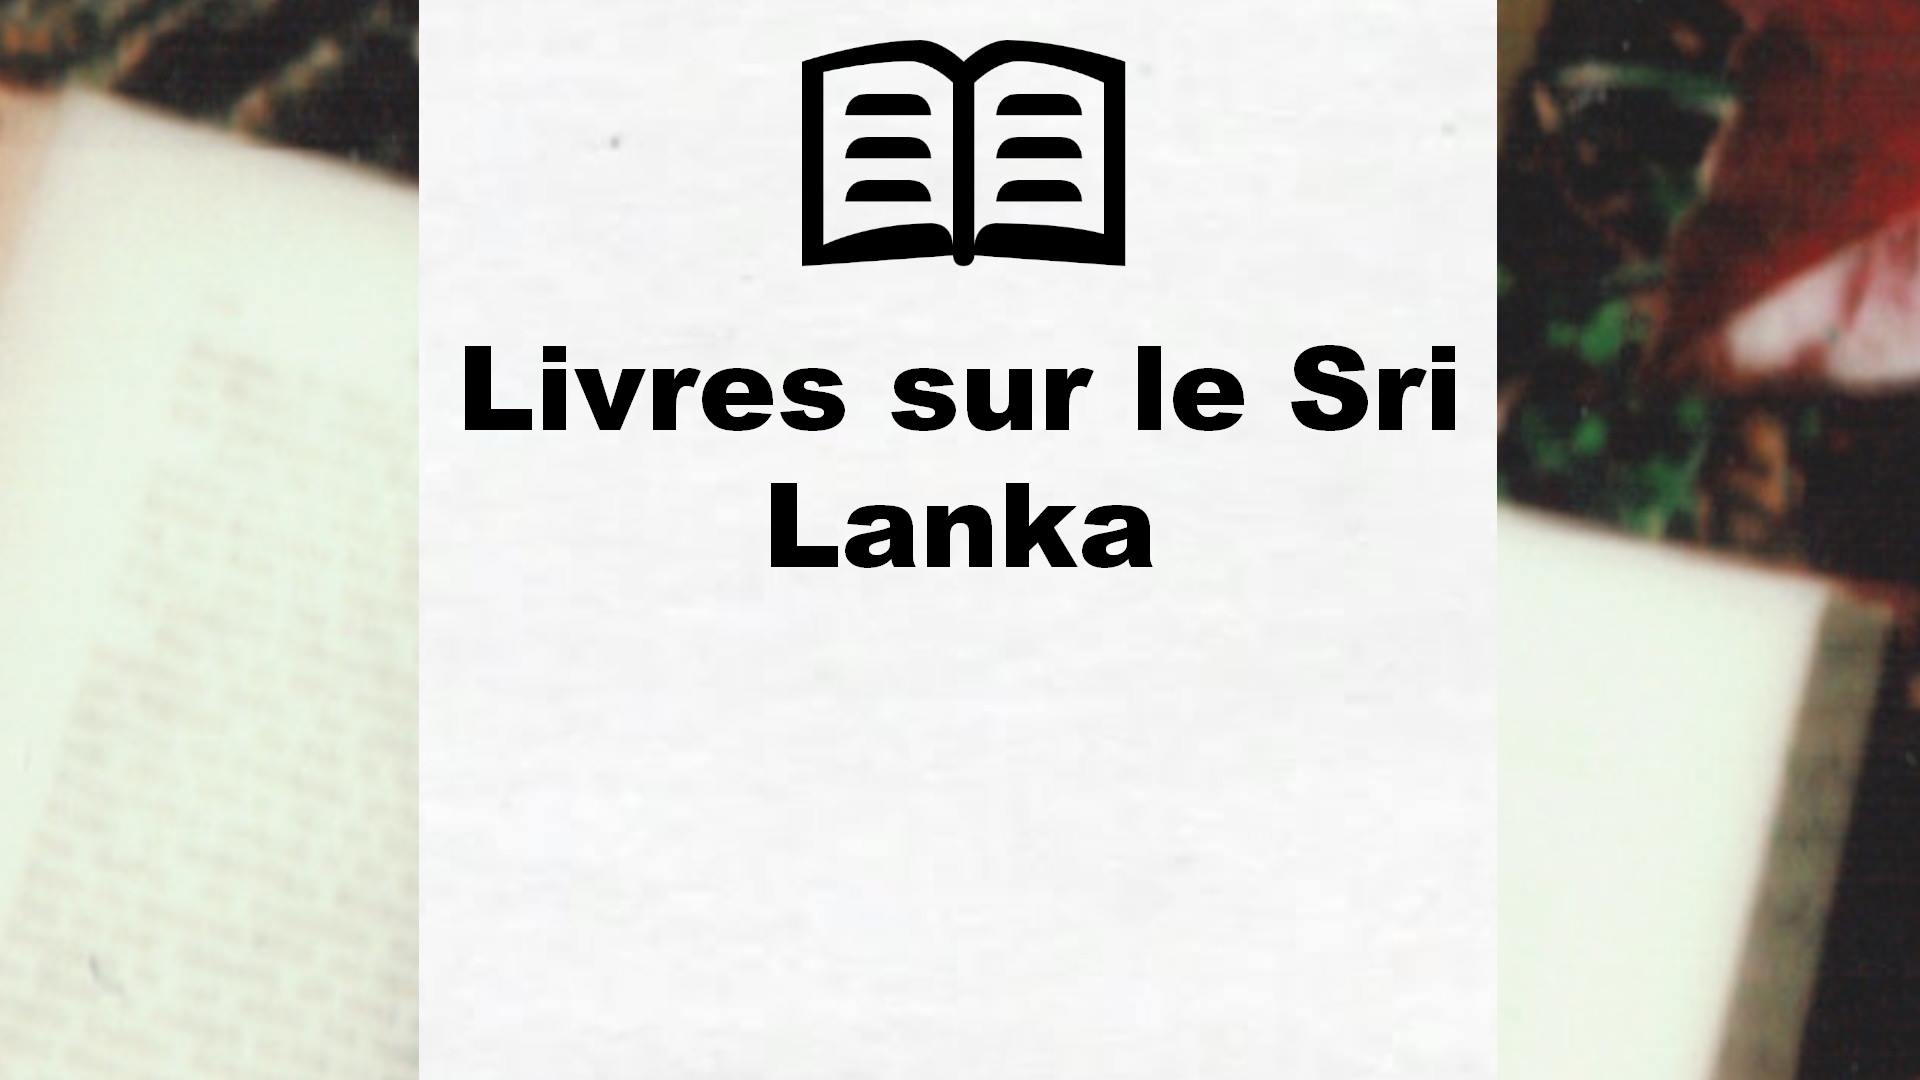 Livres sur le Sri Lanka